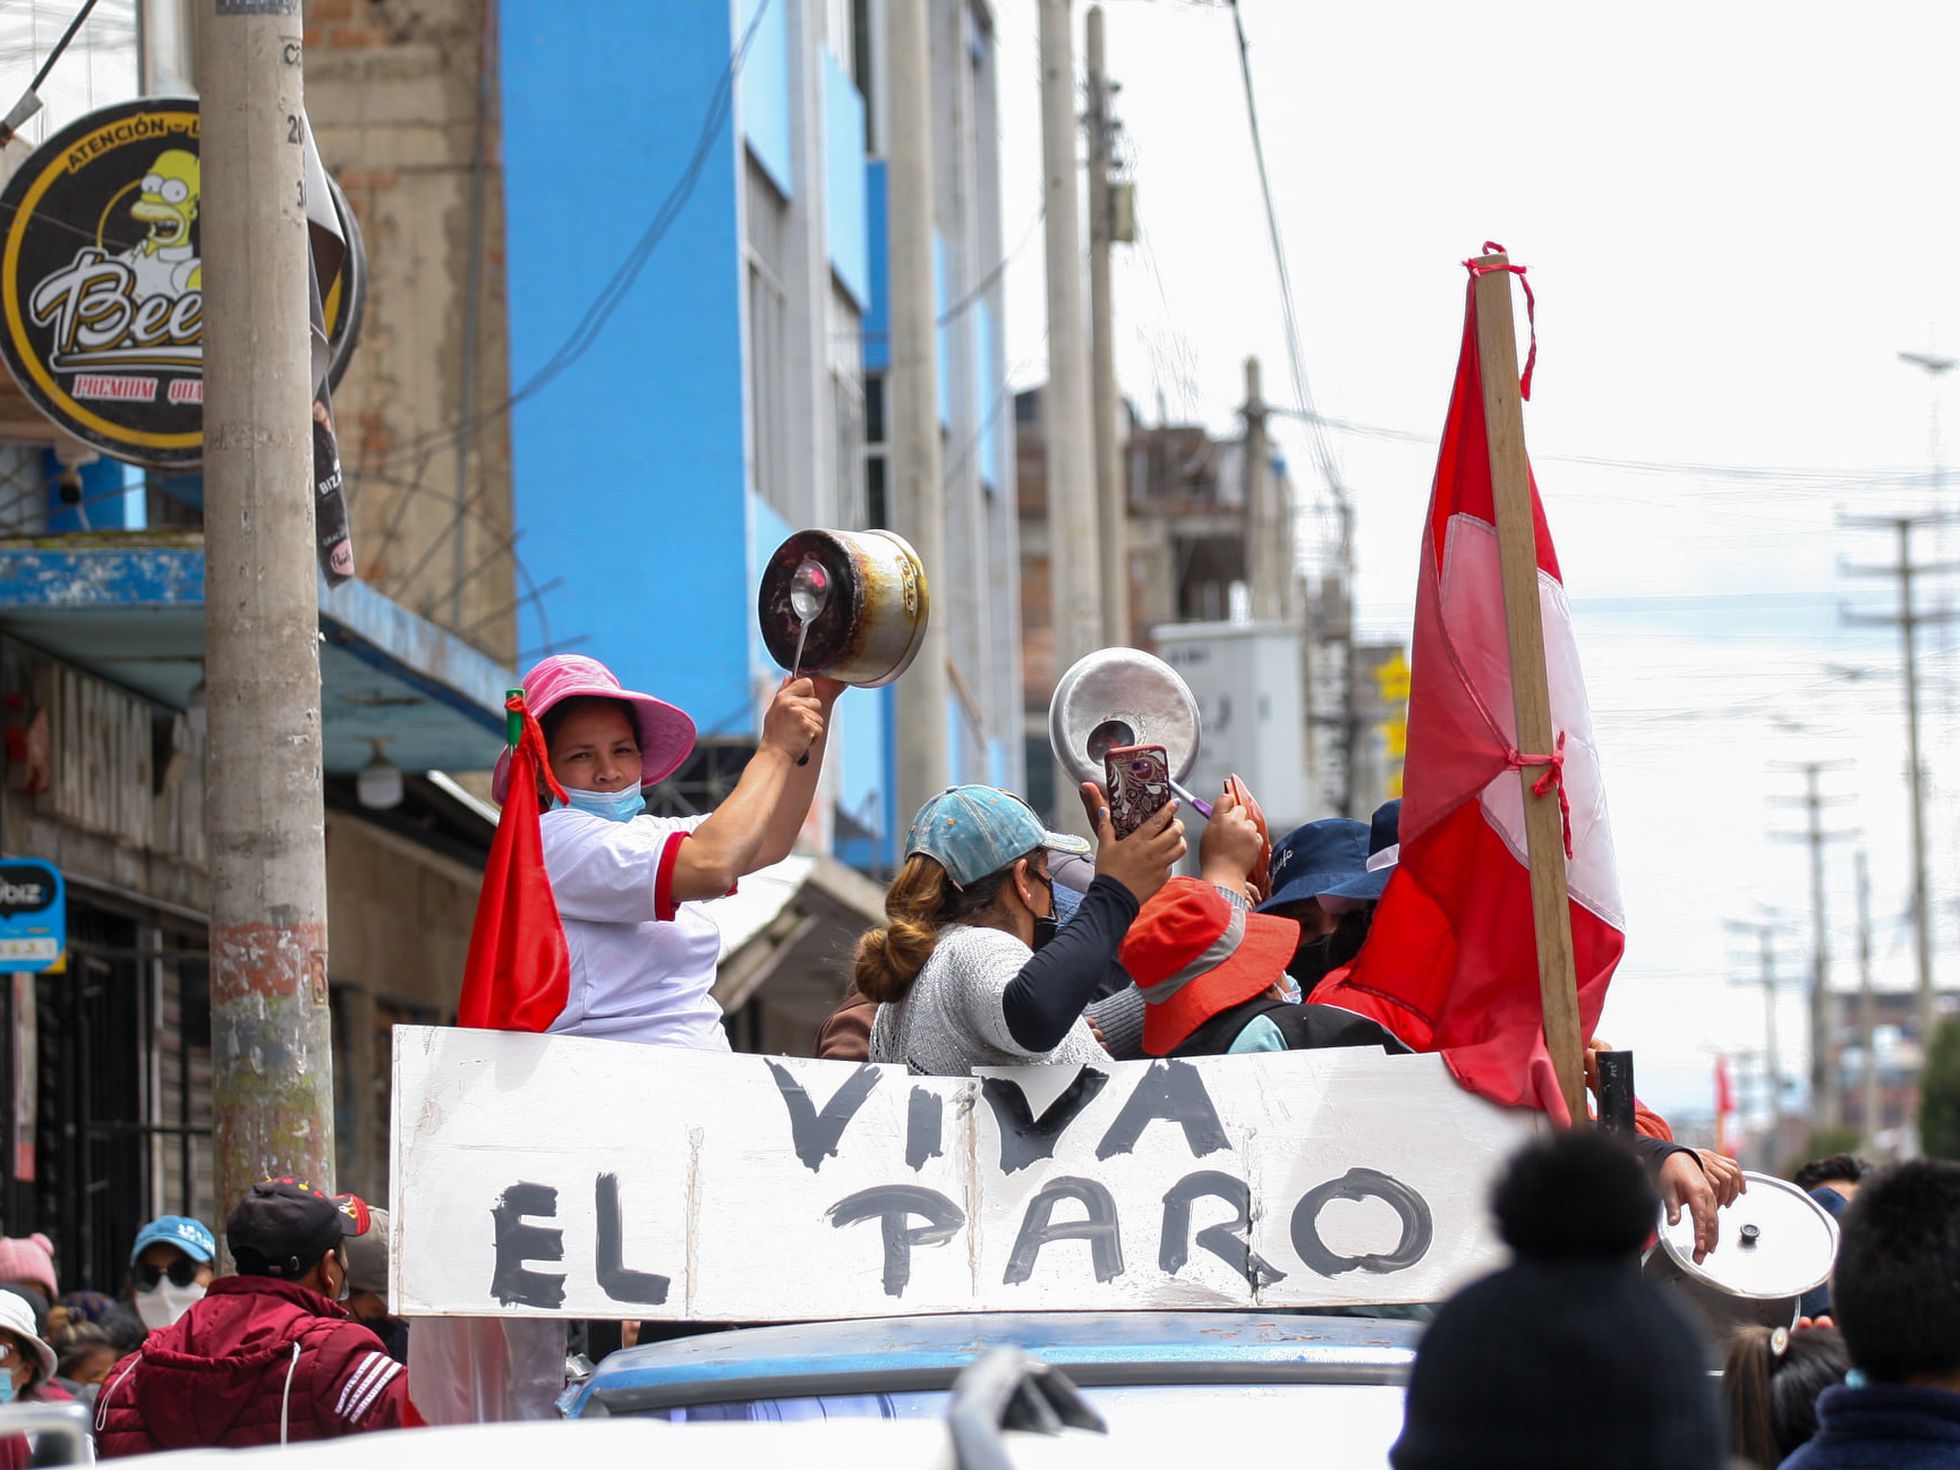 Perú llama a consulta a embajador en México tras "injerencia" en asuntos internos